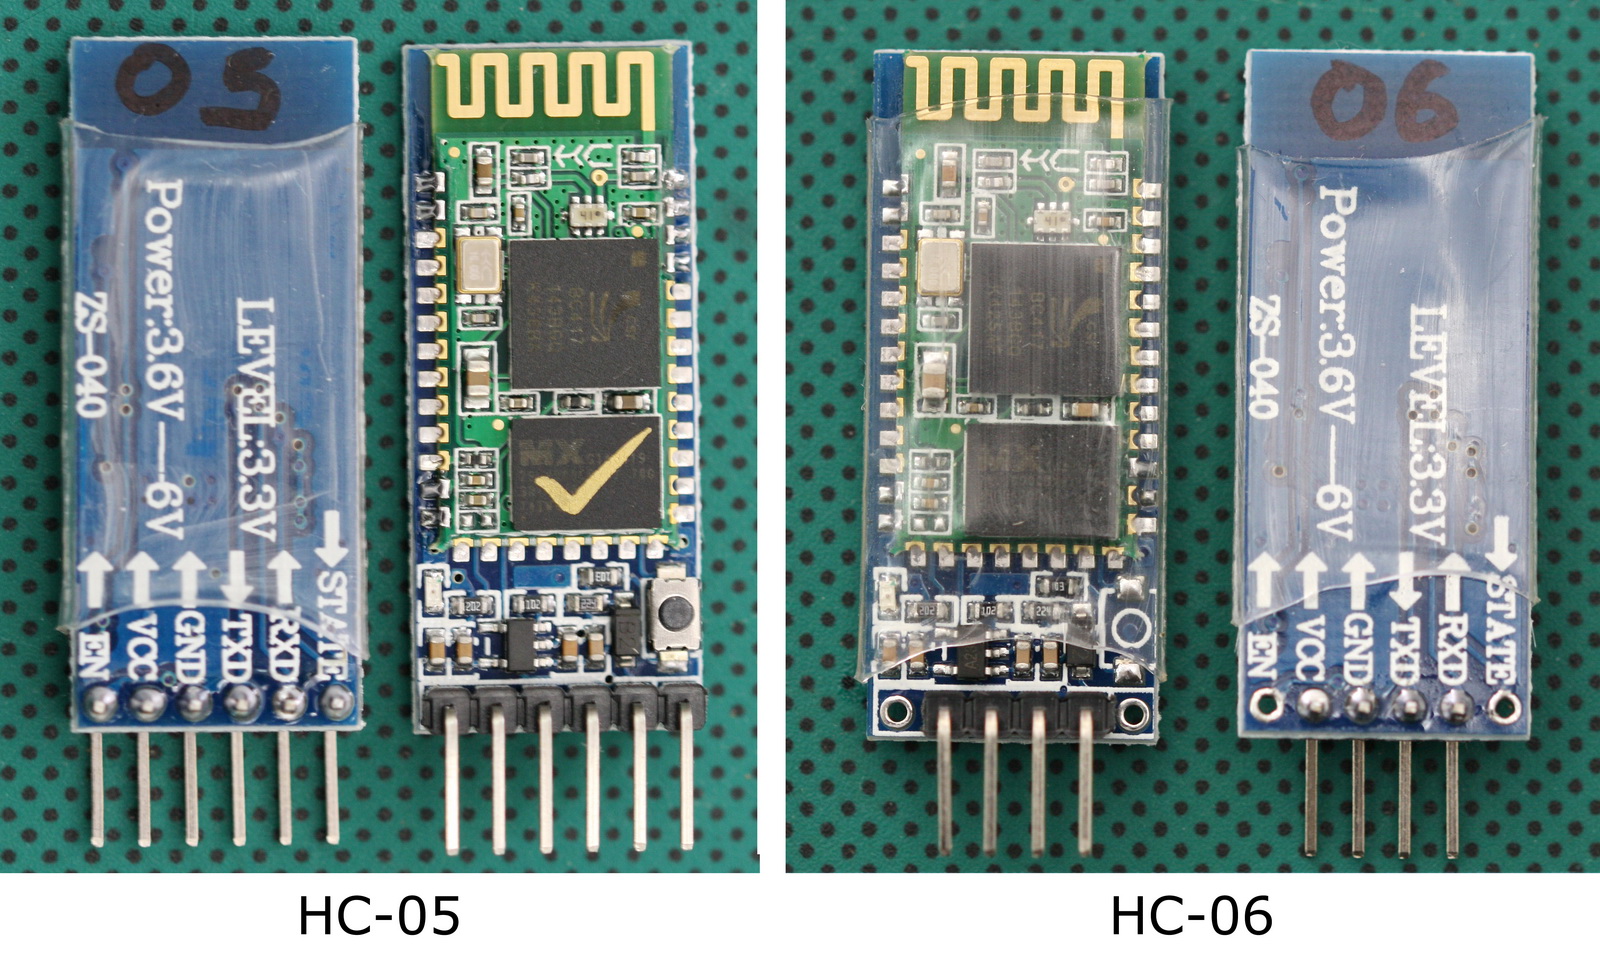 Arduino HC-05 or HC-06 Bluetooth Module